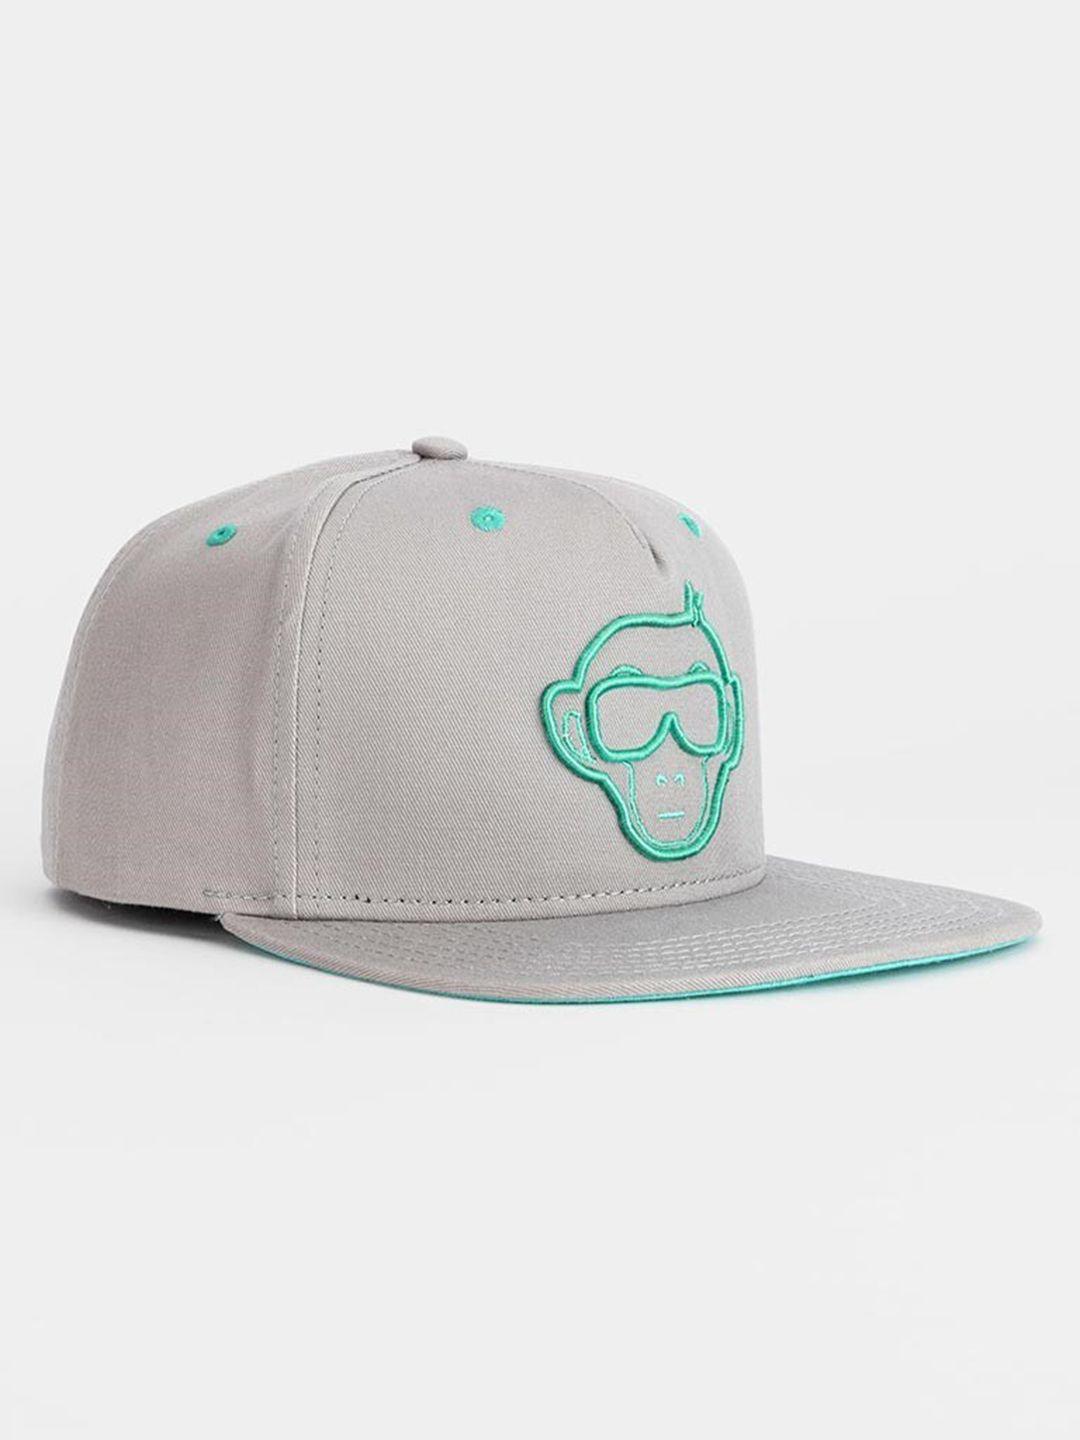 urban monkey unisex embroidered cotton baseball cap